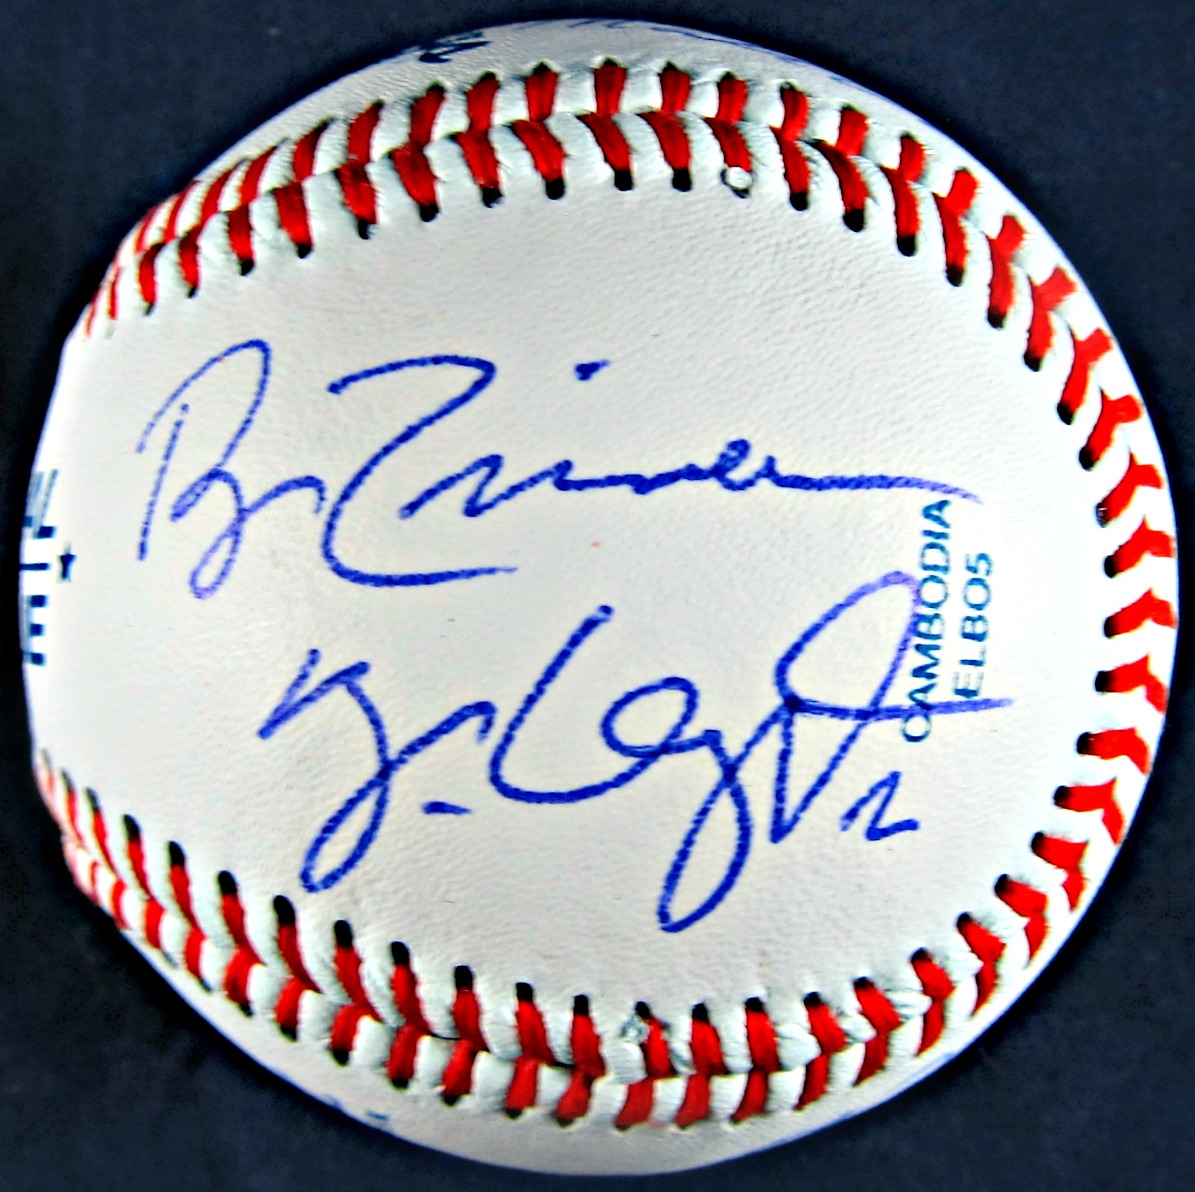 2017 NL All Star Autographed Baseball